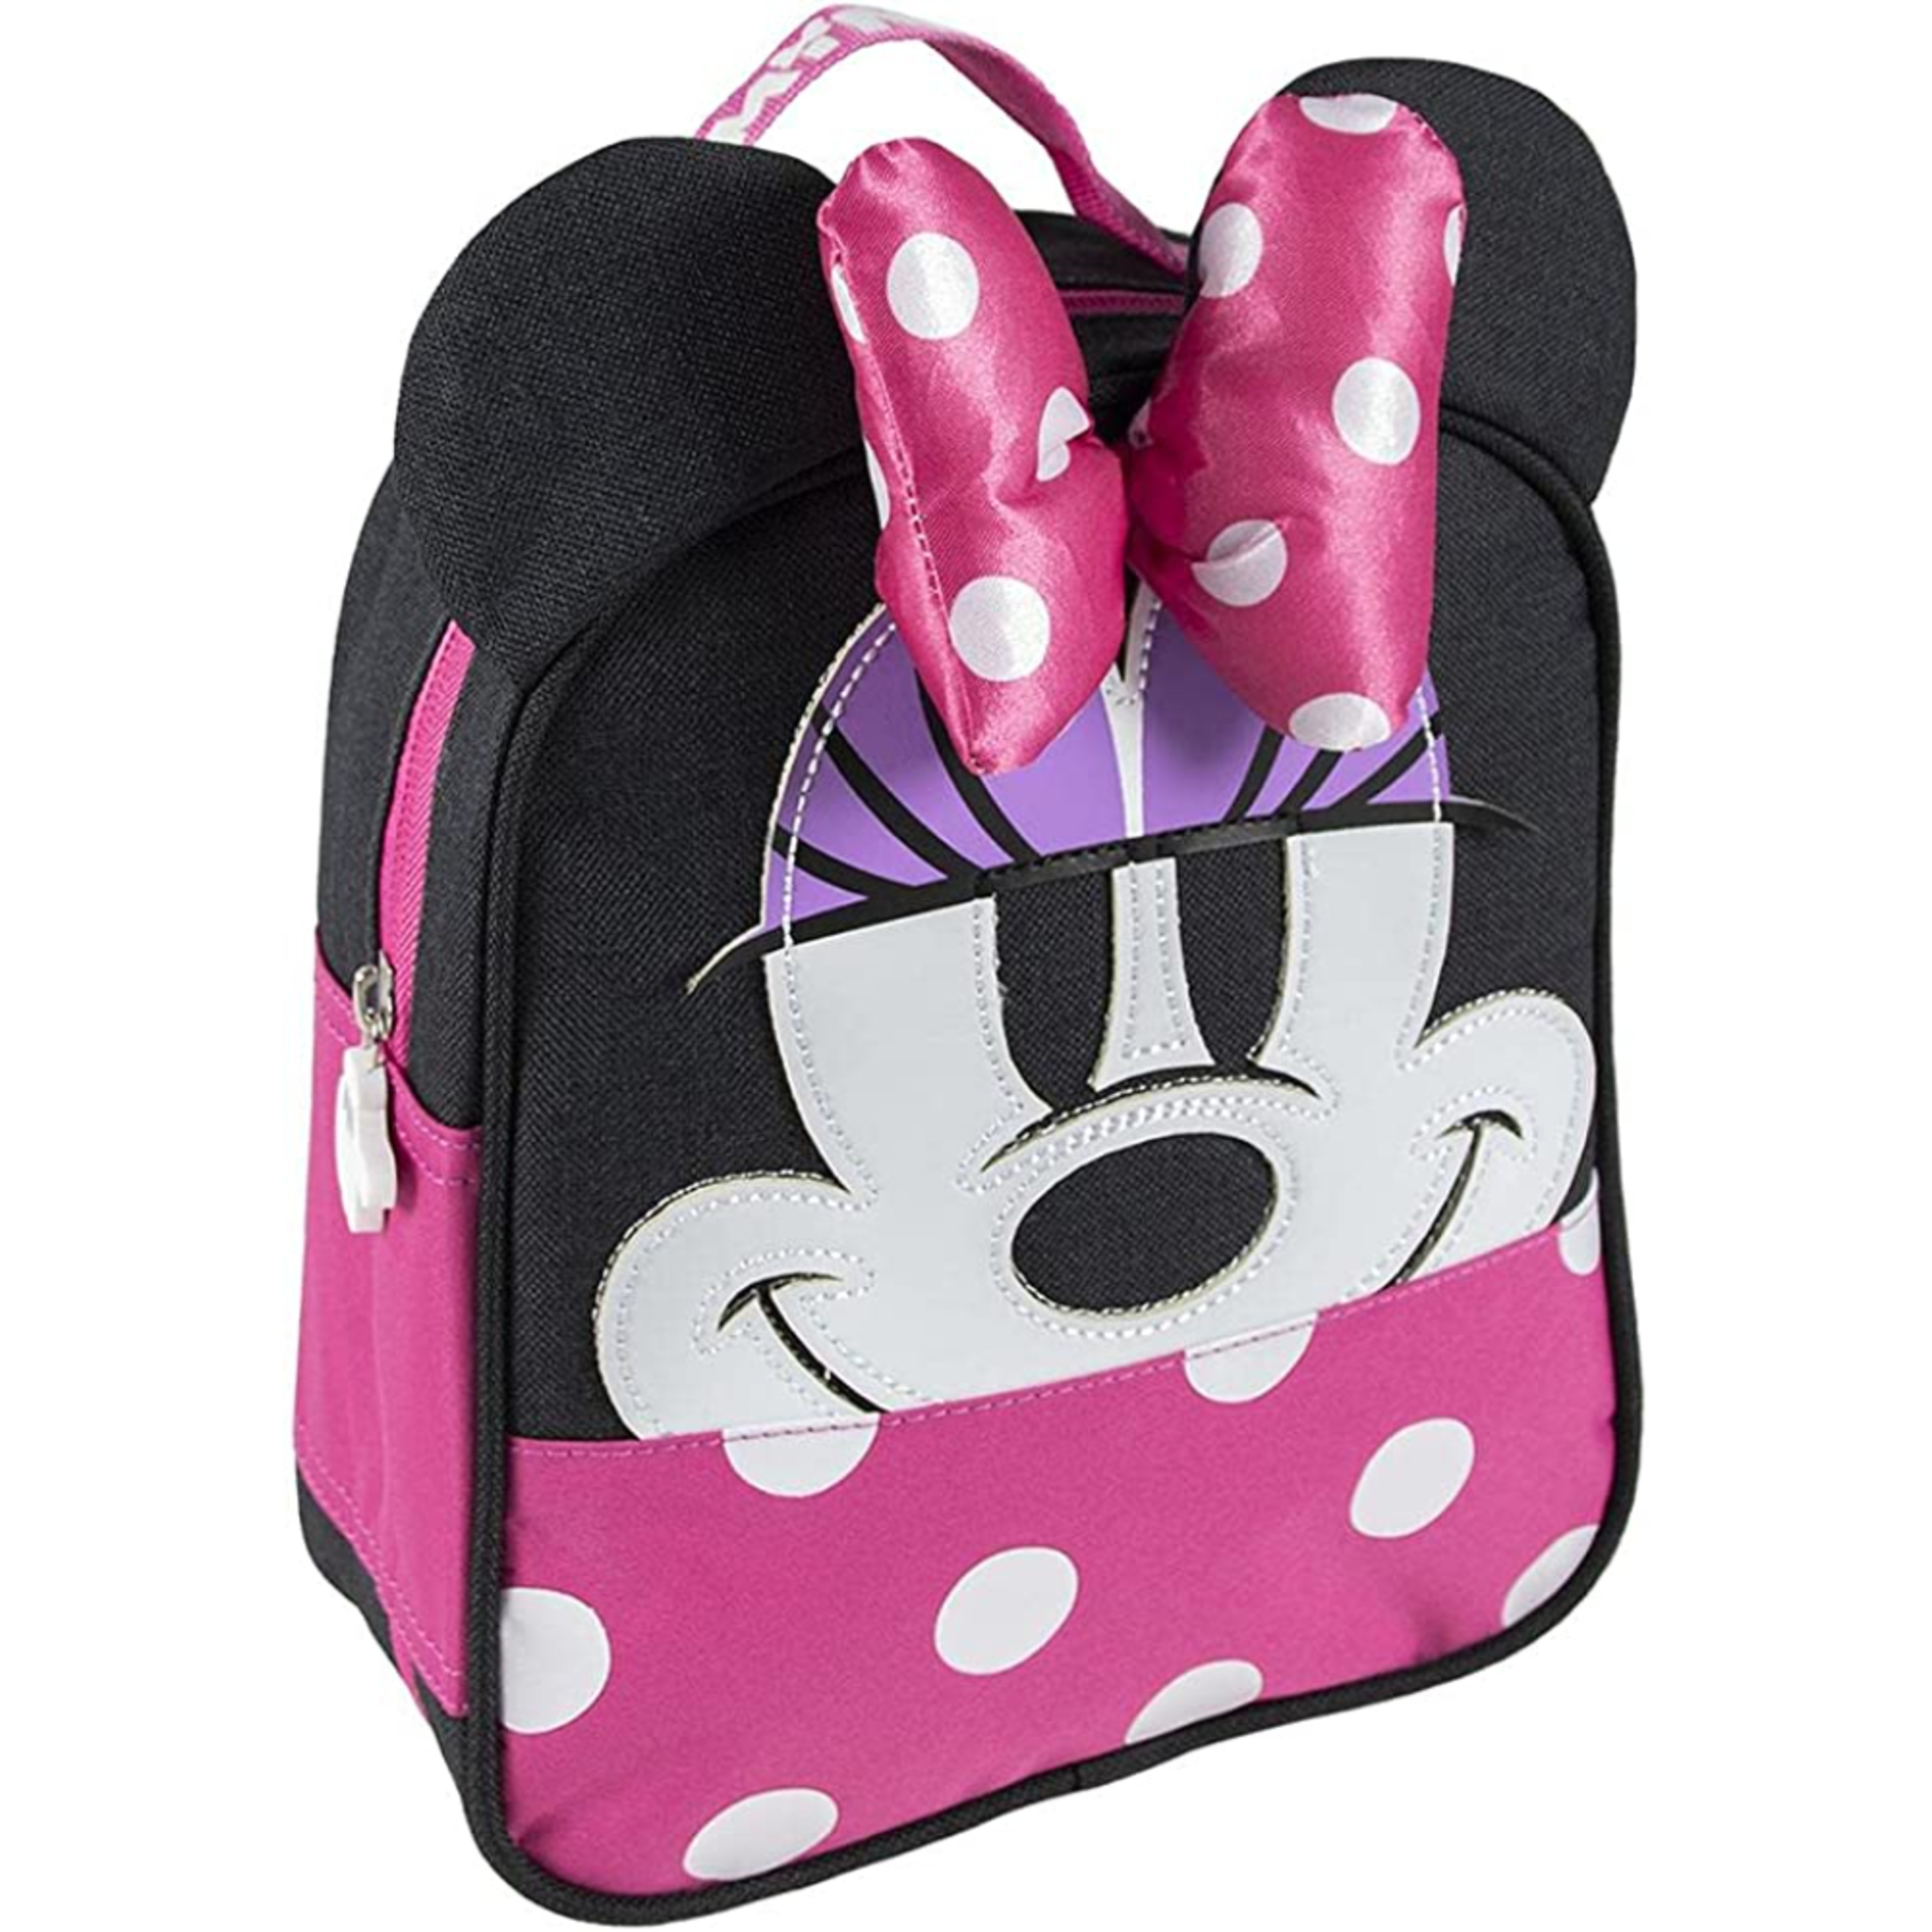 Bolsa Portaalimentos Minnie Mouse 72519 - rosa - 